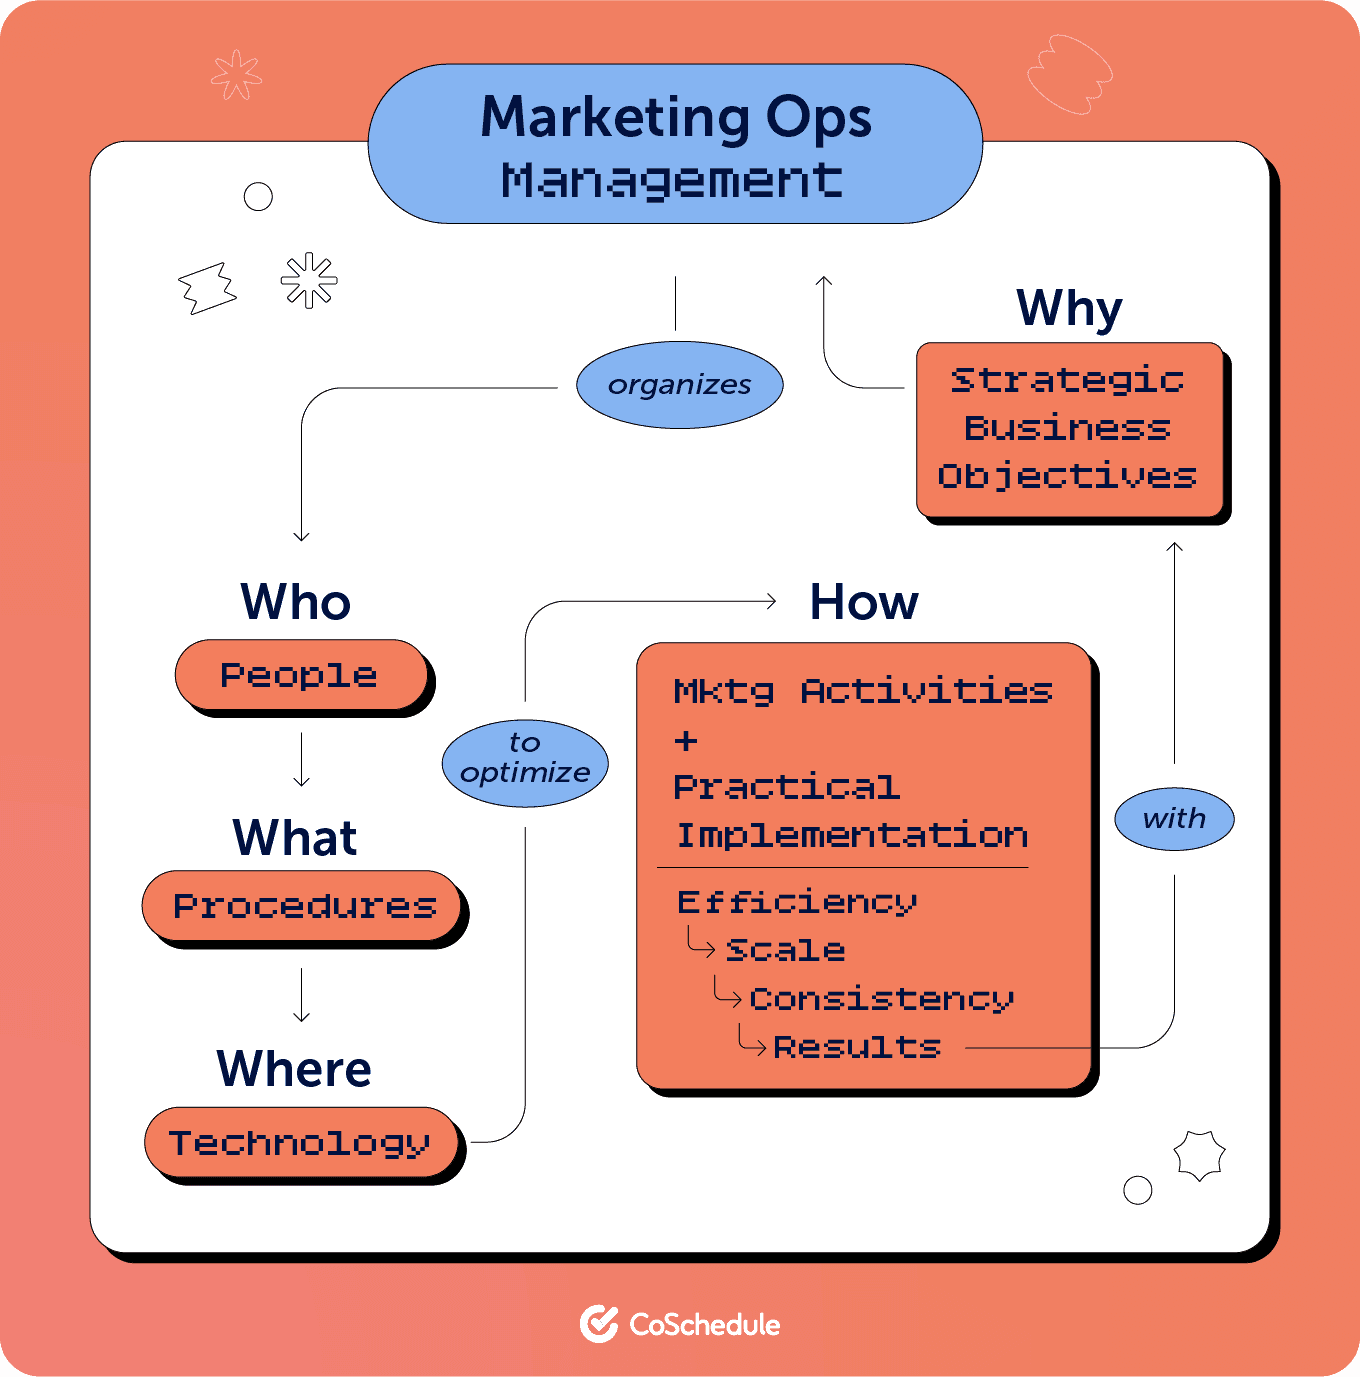 Marketing Operations management process